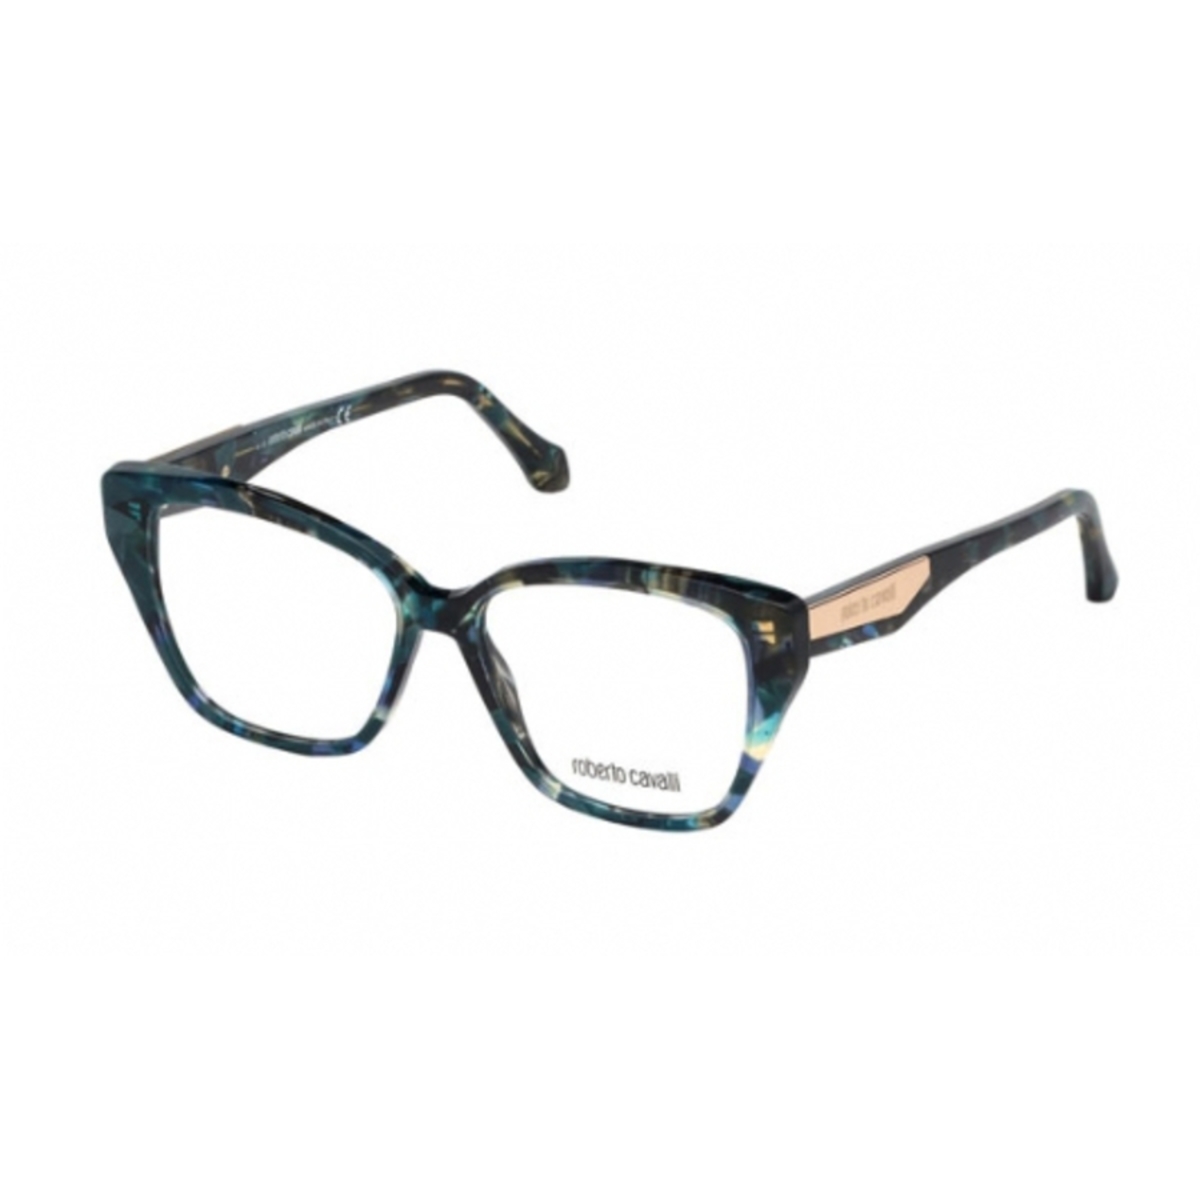 Roberto Cavalli Ladies Tortoise Round Eyeglass Frames Rc508305653